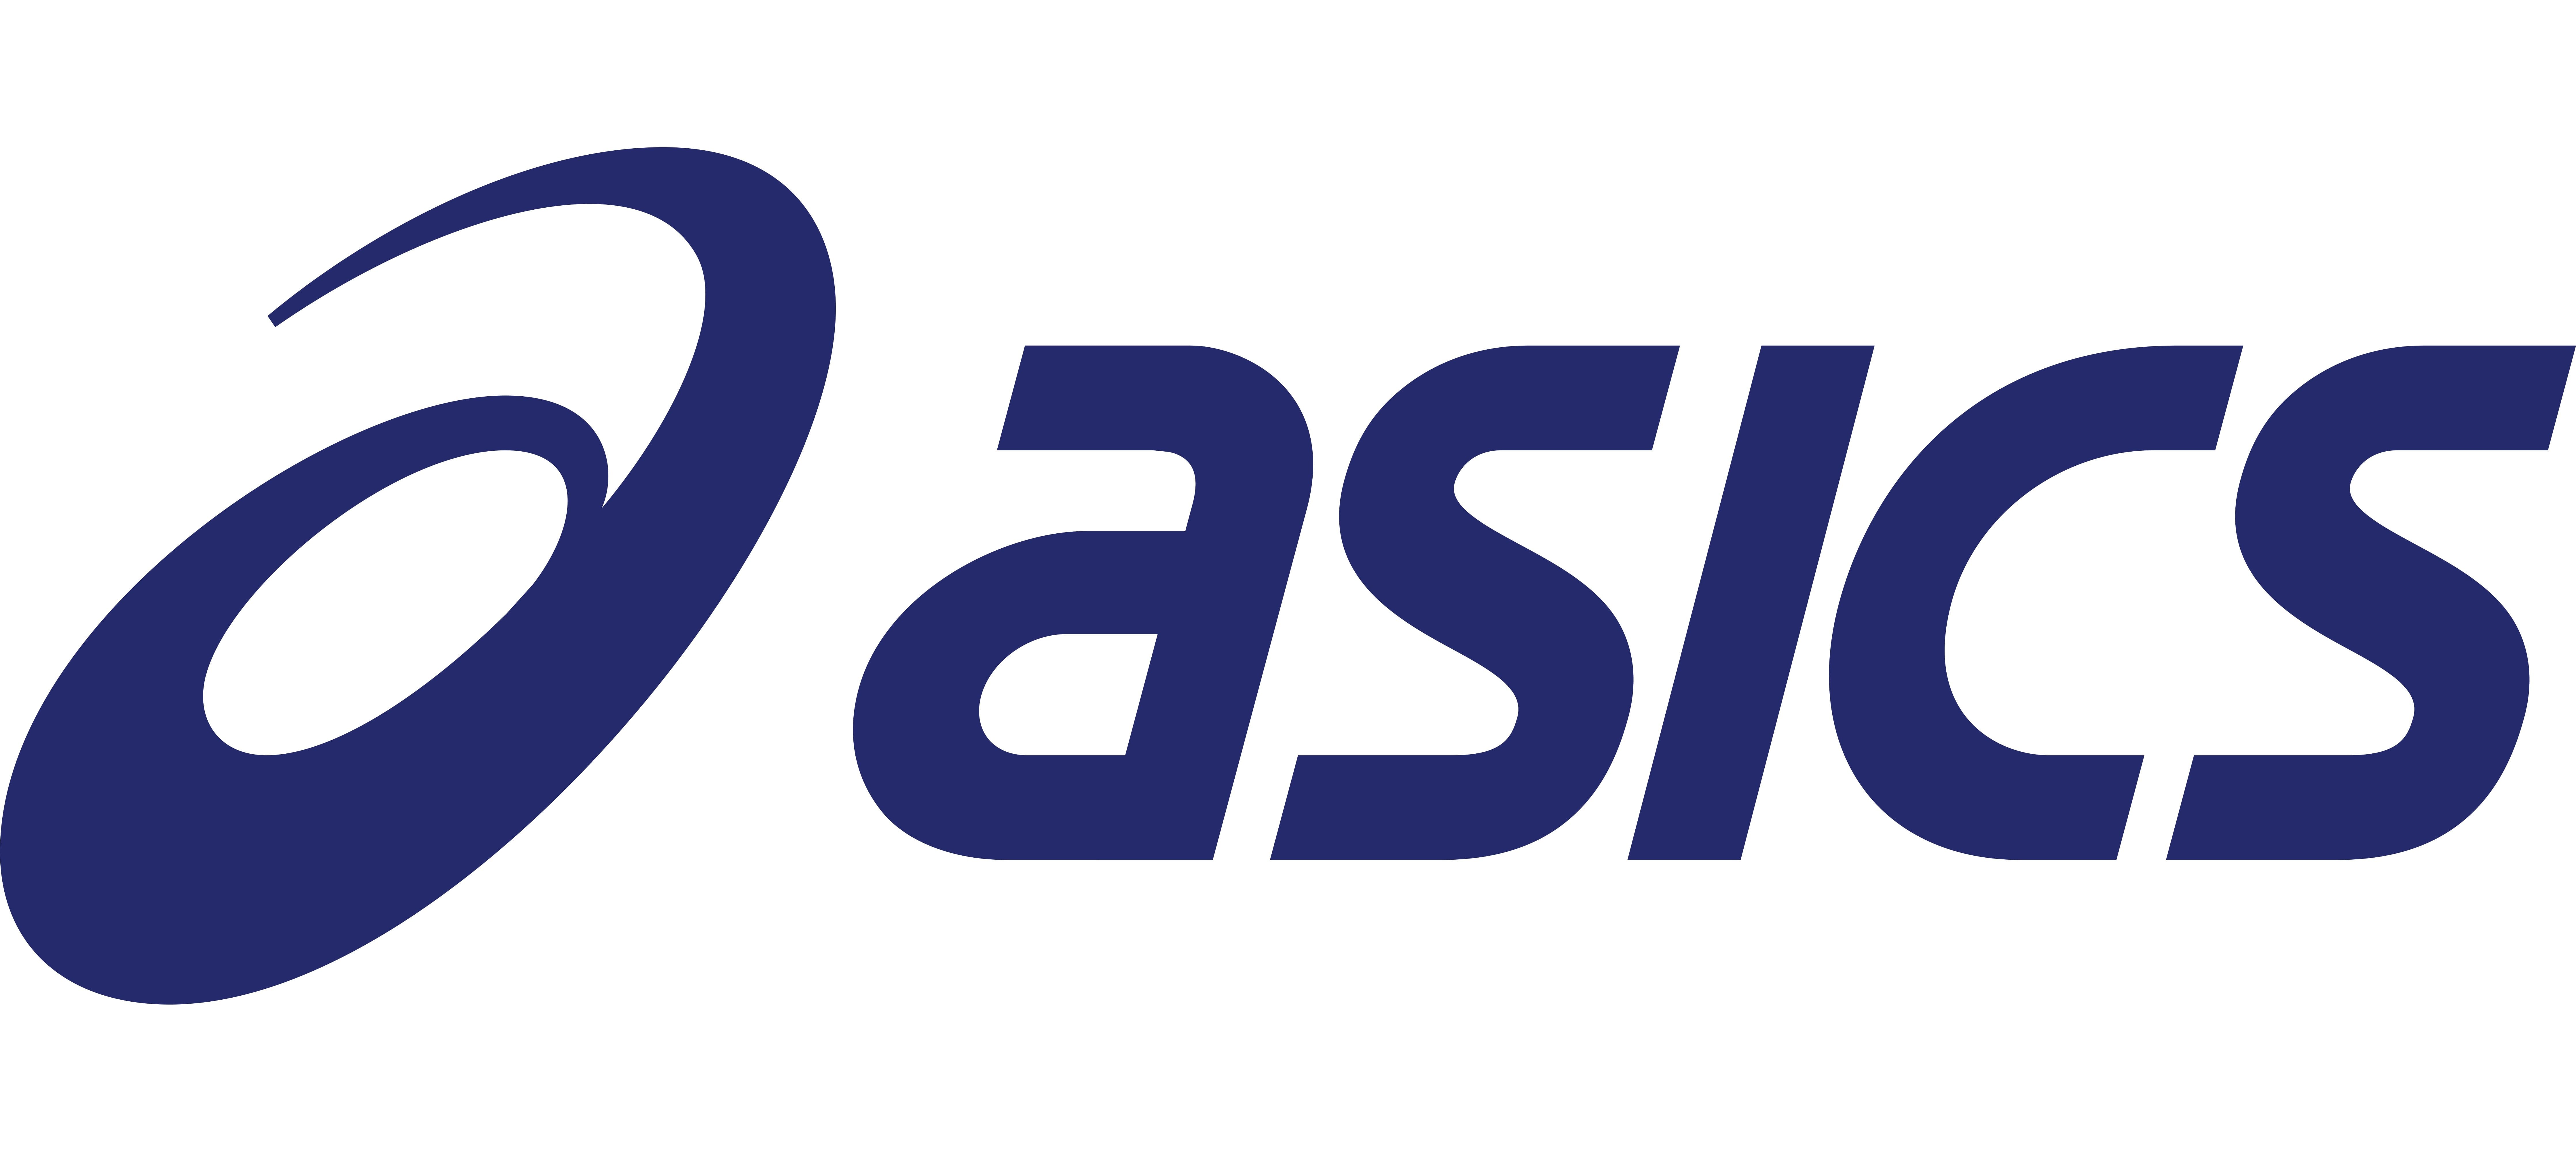 ASICS Logo History: The ASICS Shoes Logo And Brand